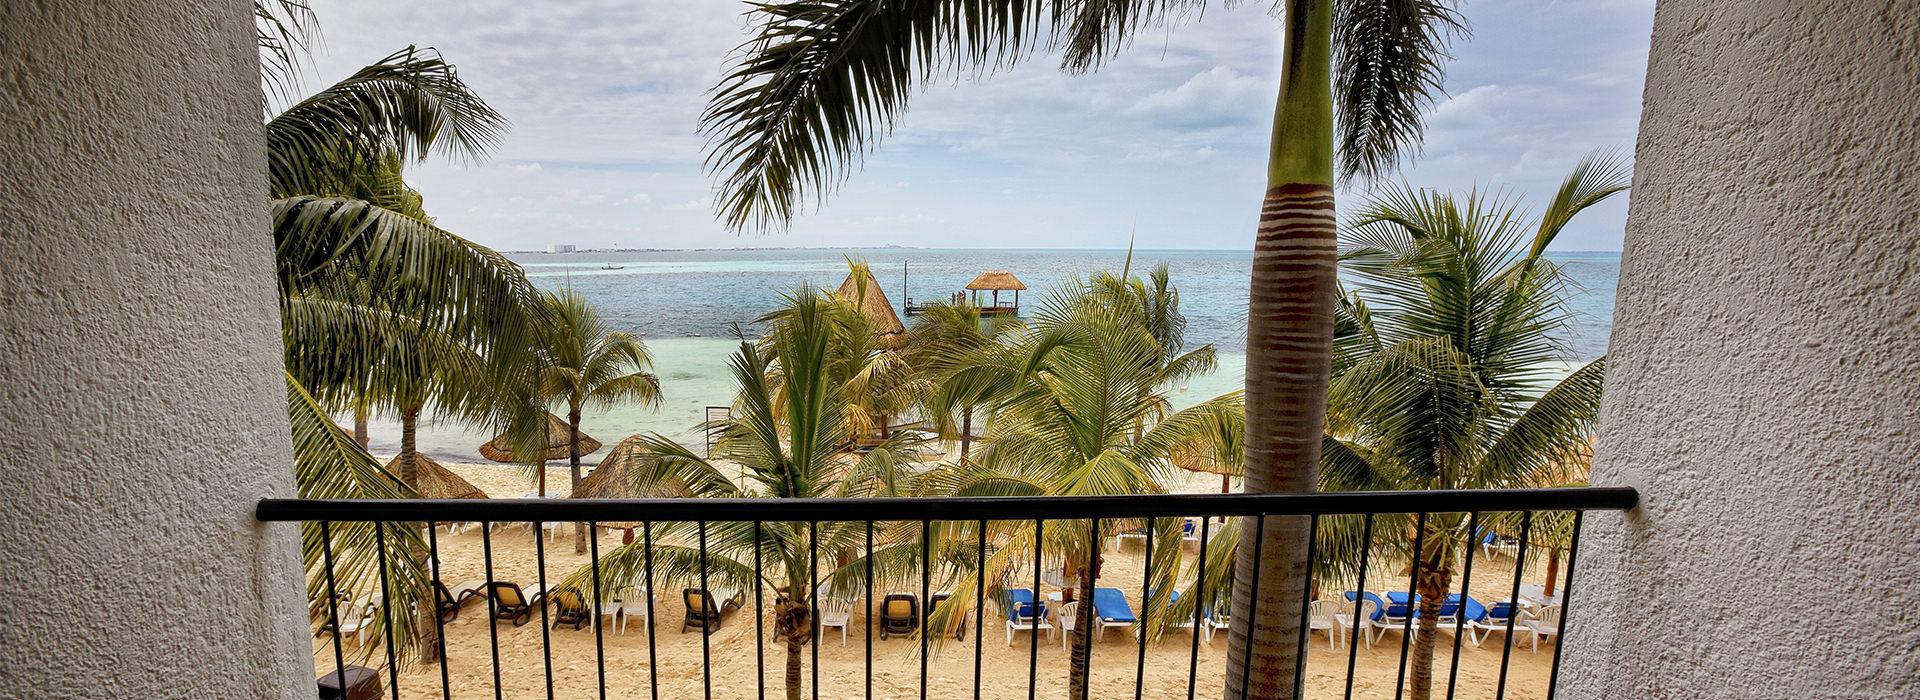 Cancun room beachfront balcony